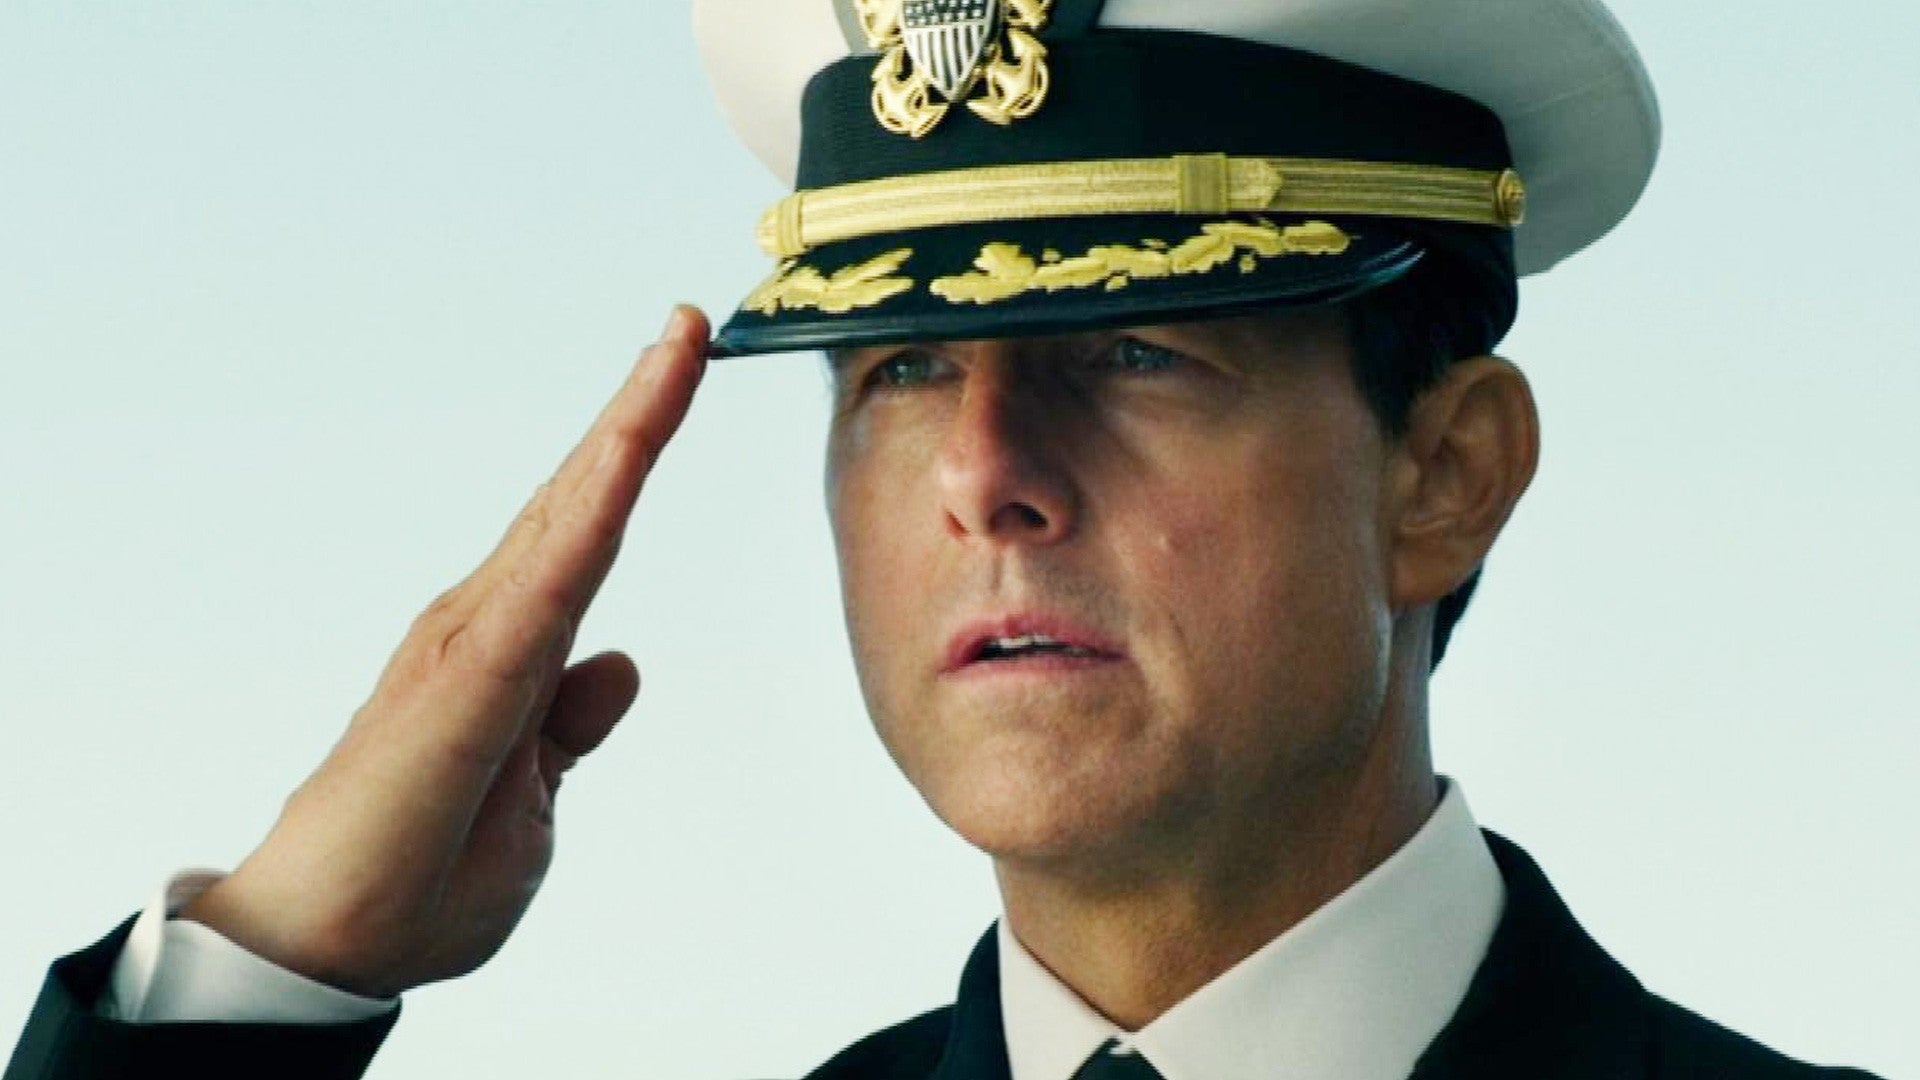 Top Gun: Maverick' movie release postponed to 2022 due to